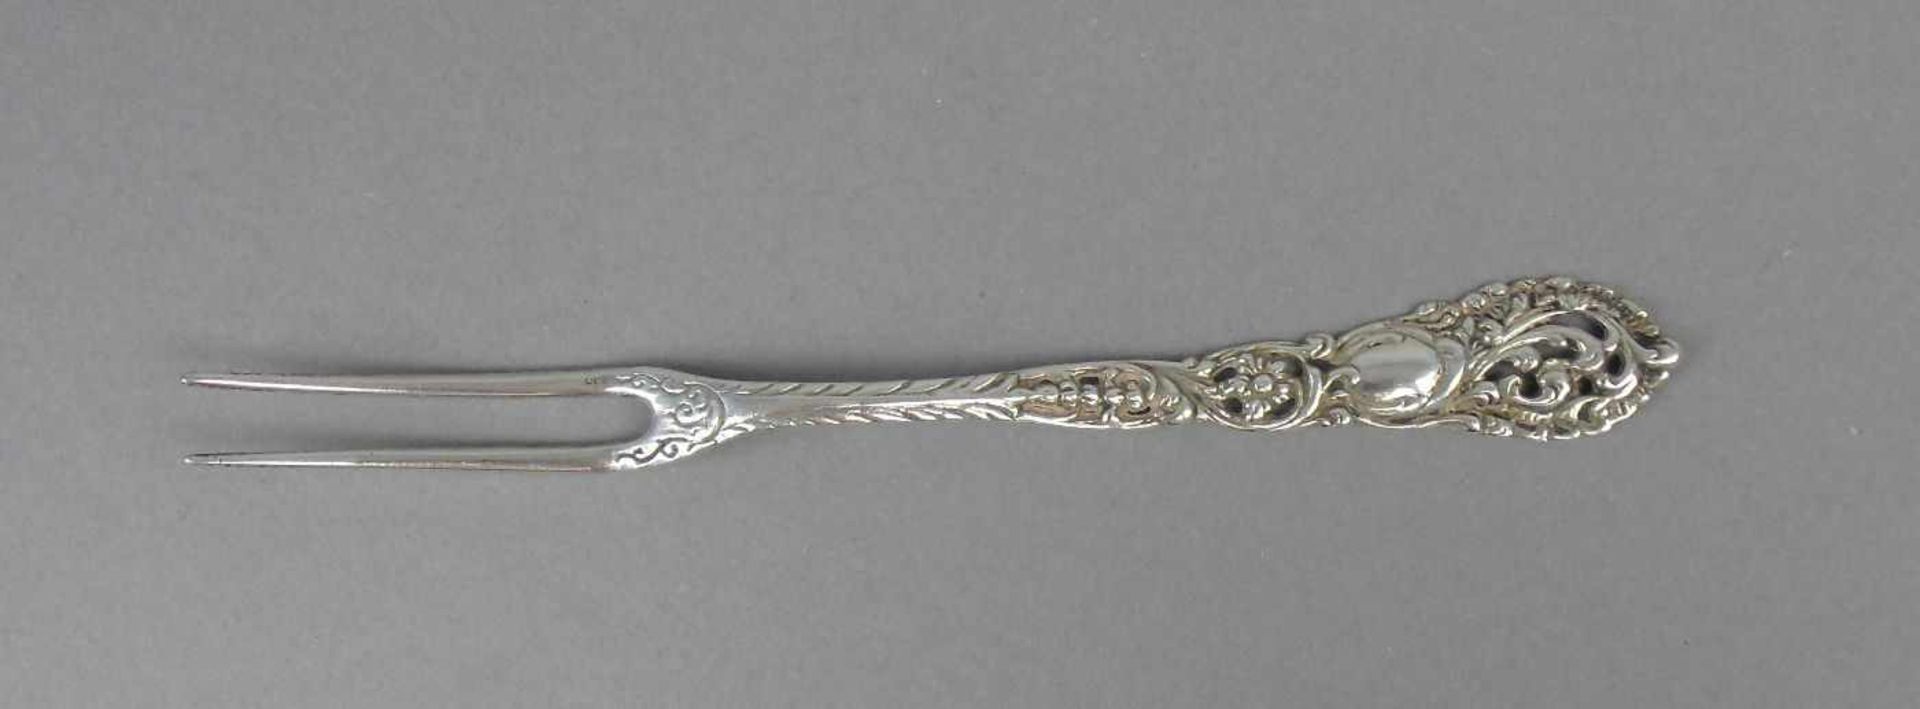 VORLEGEGABEL / serving fork, wohl deutsch, 1. H. 20. Jh., 830er Silber (15,8 g). Geschweifte Form,